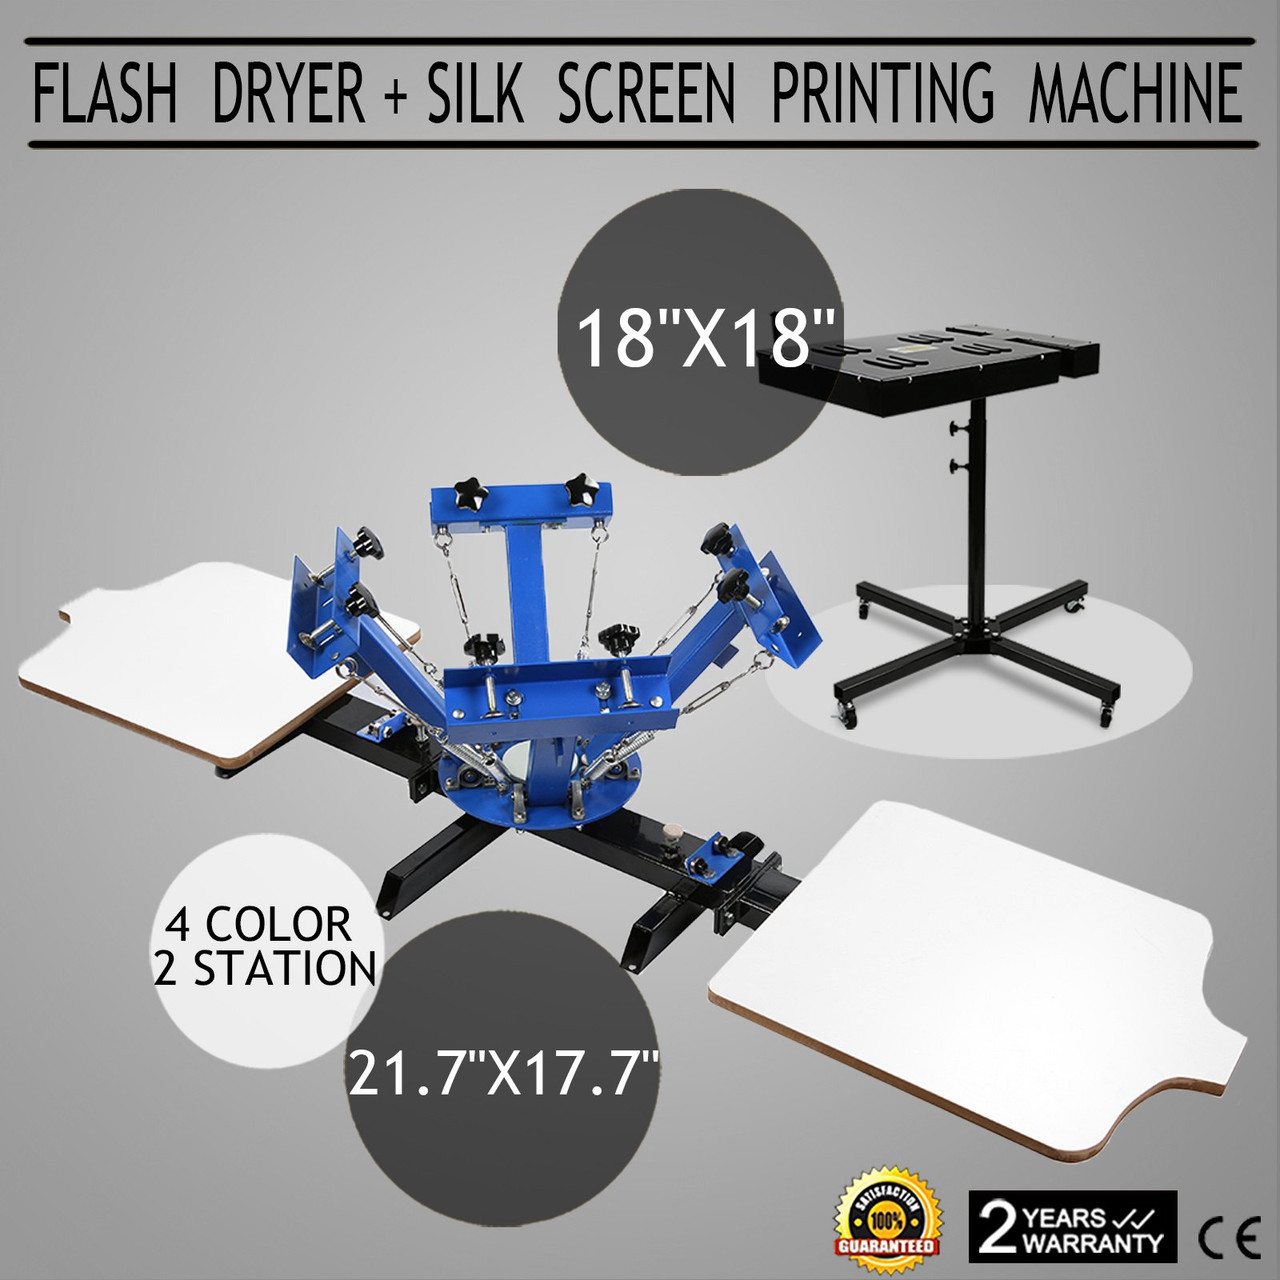 4 Color 2 Station Silk Screen Printing Kit Press Machine Flash Dryer DIY Tools